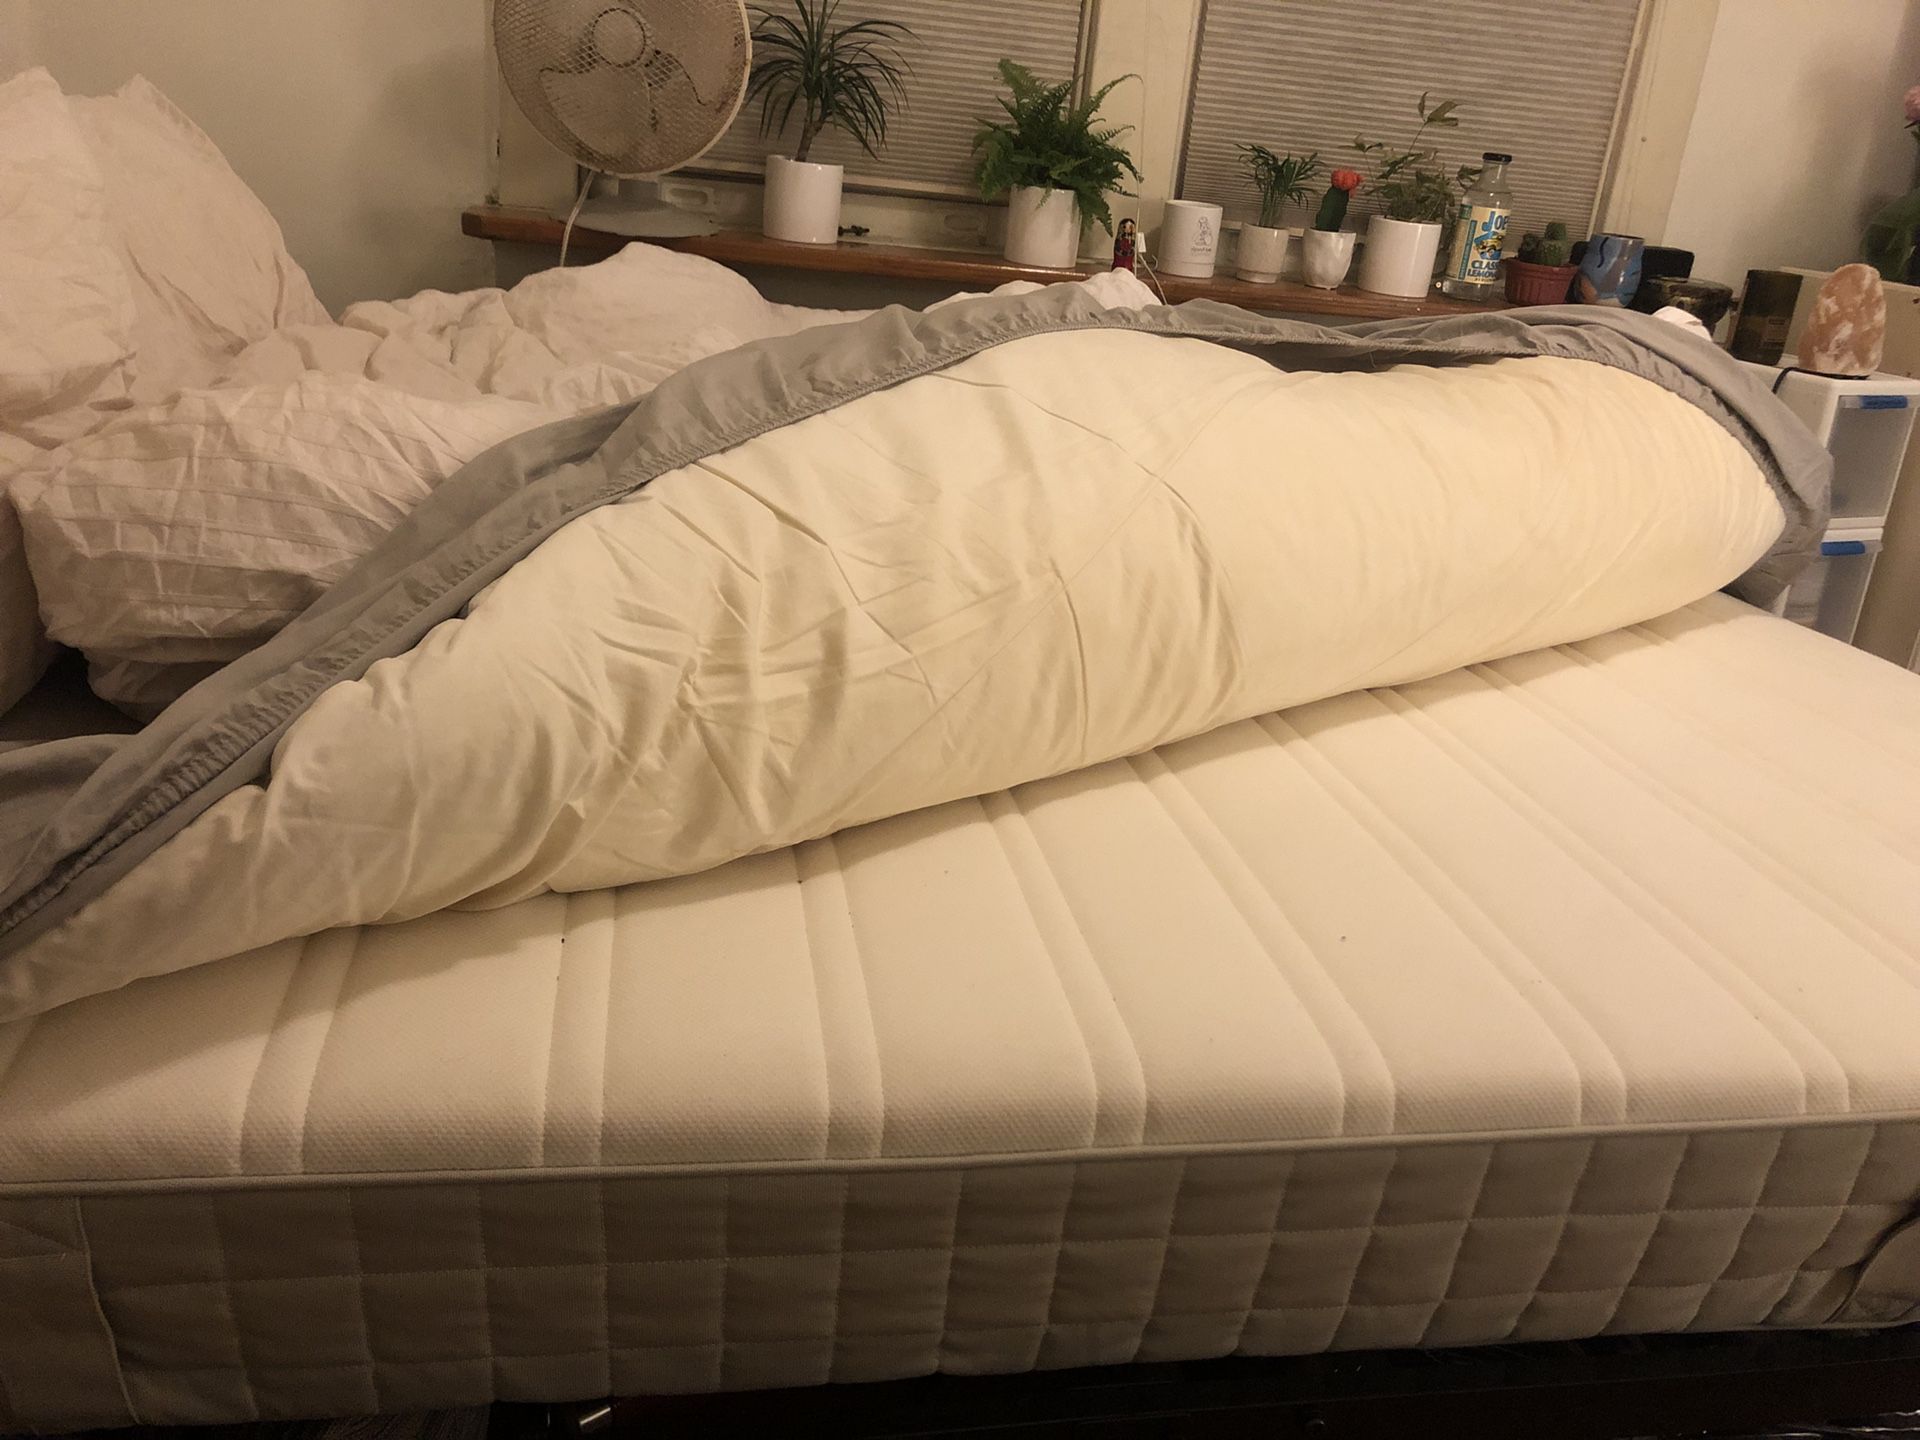 IKEA hasvag queen mattress -$50 PICK UP TODAY AUGUST 1st